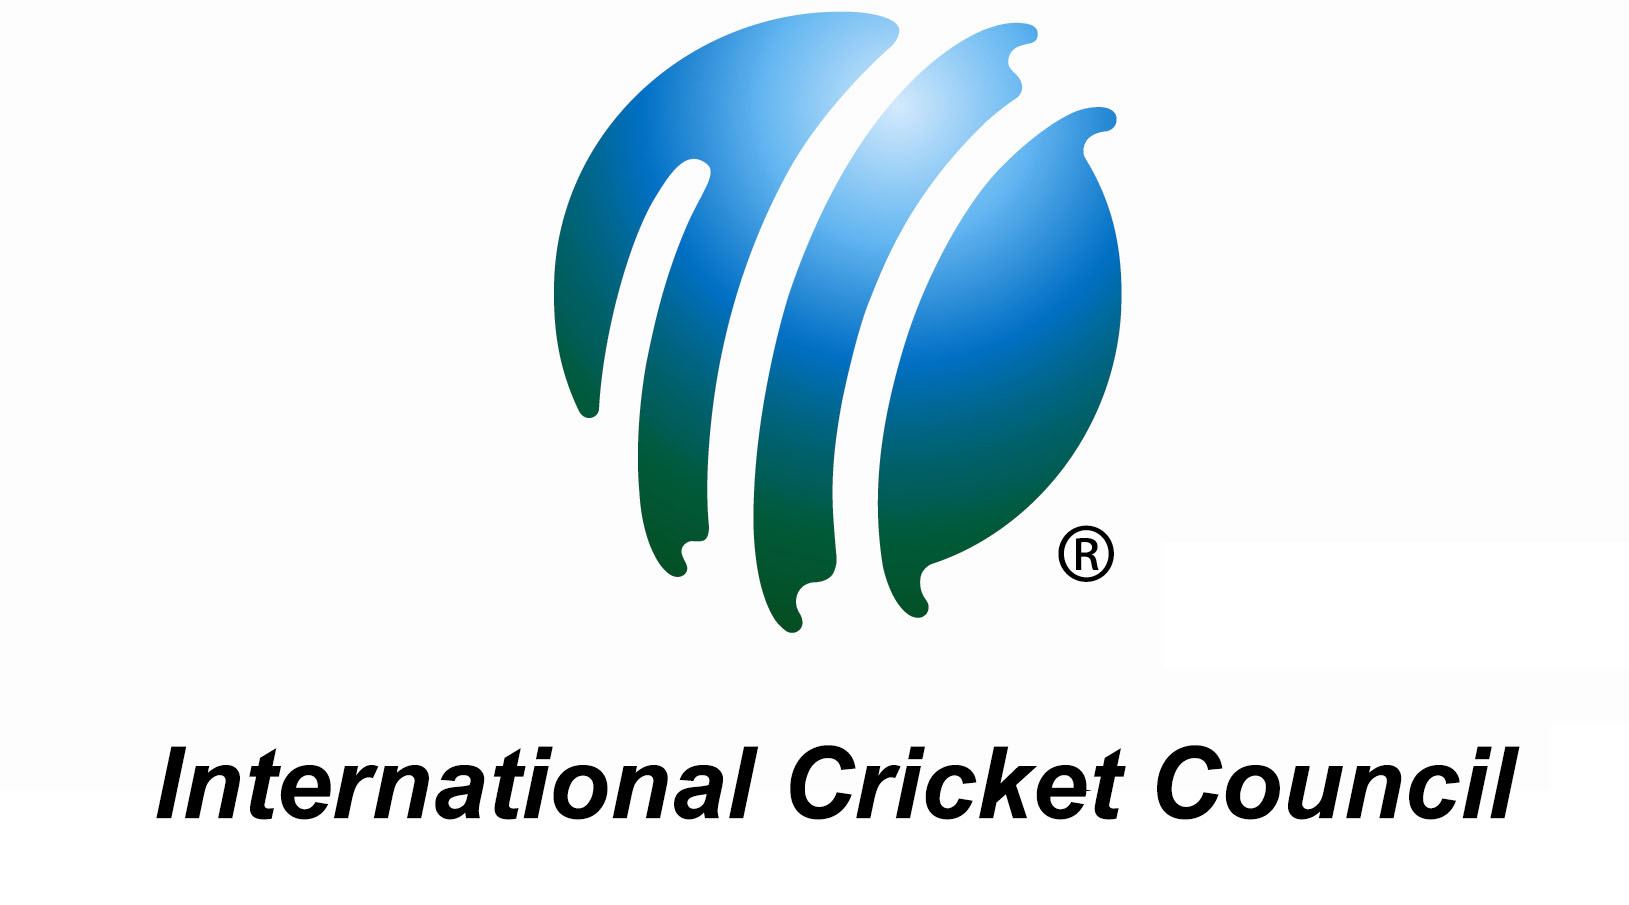 आईसीसी टेस्ट चैंपियनशिप